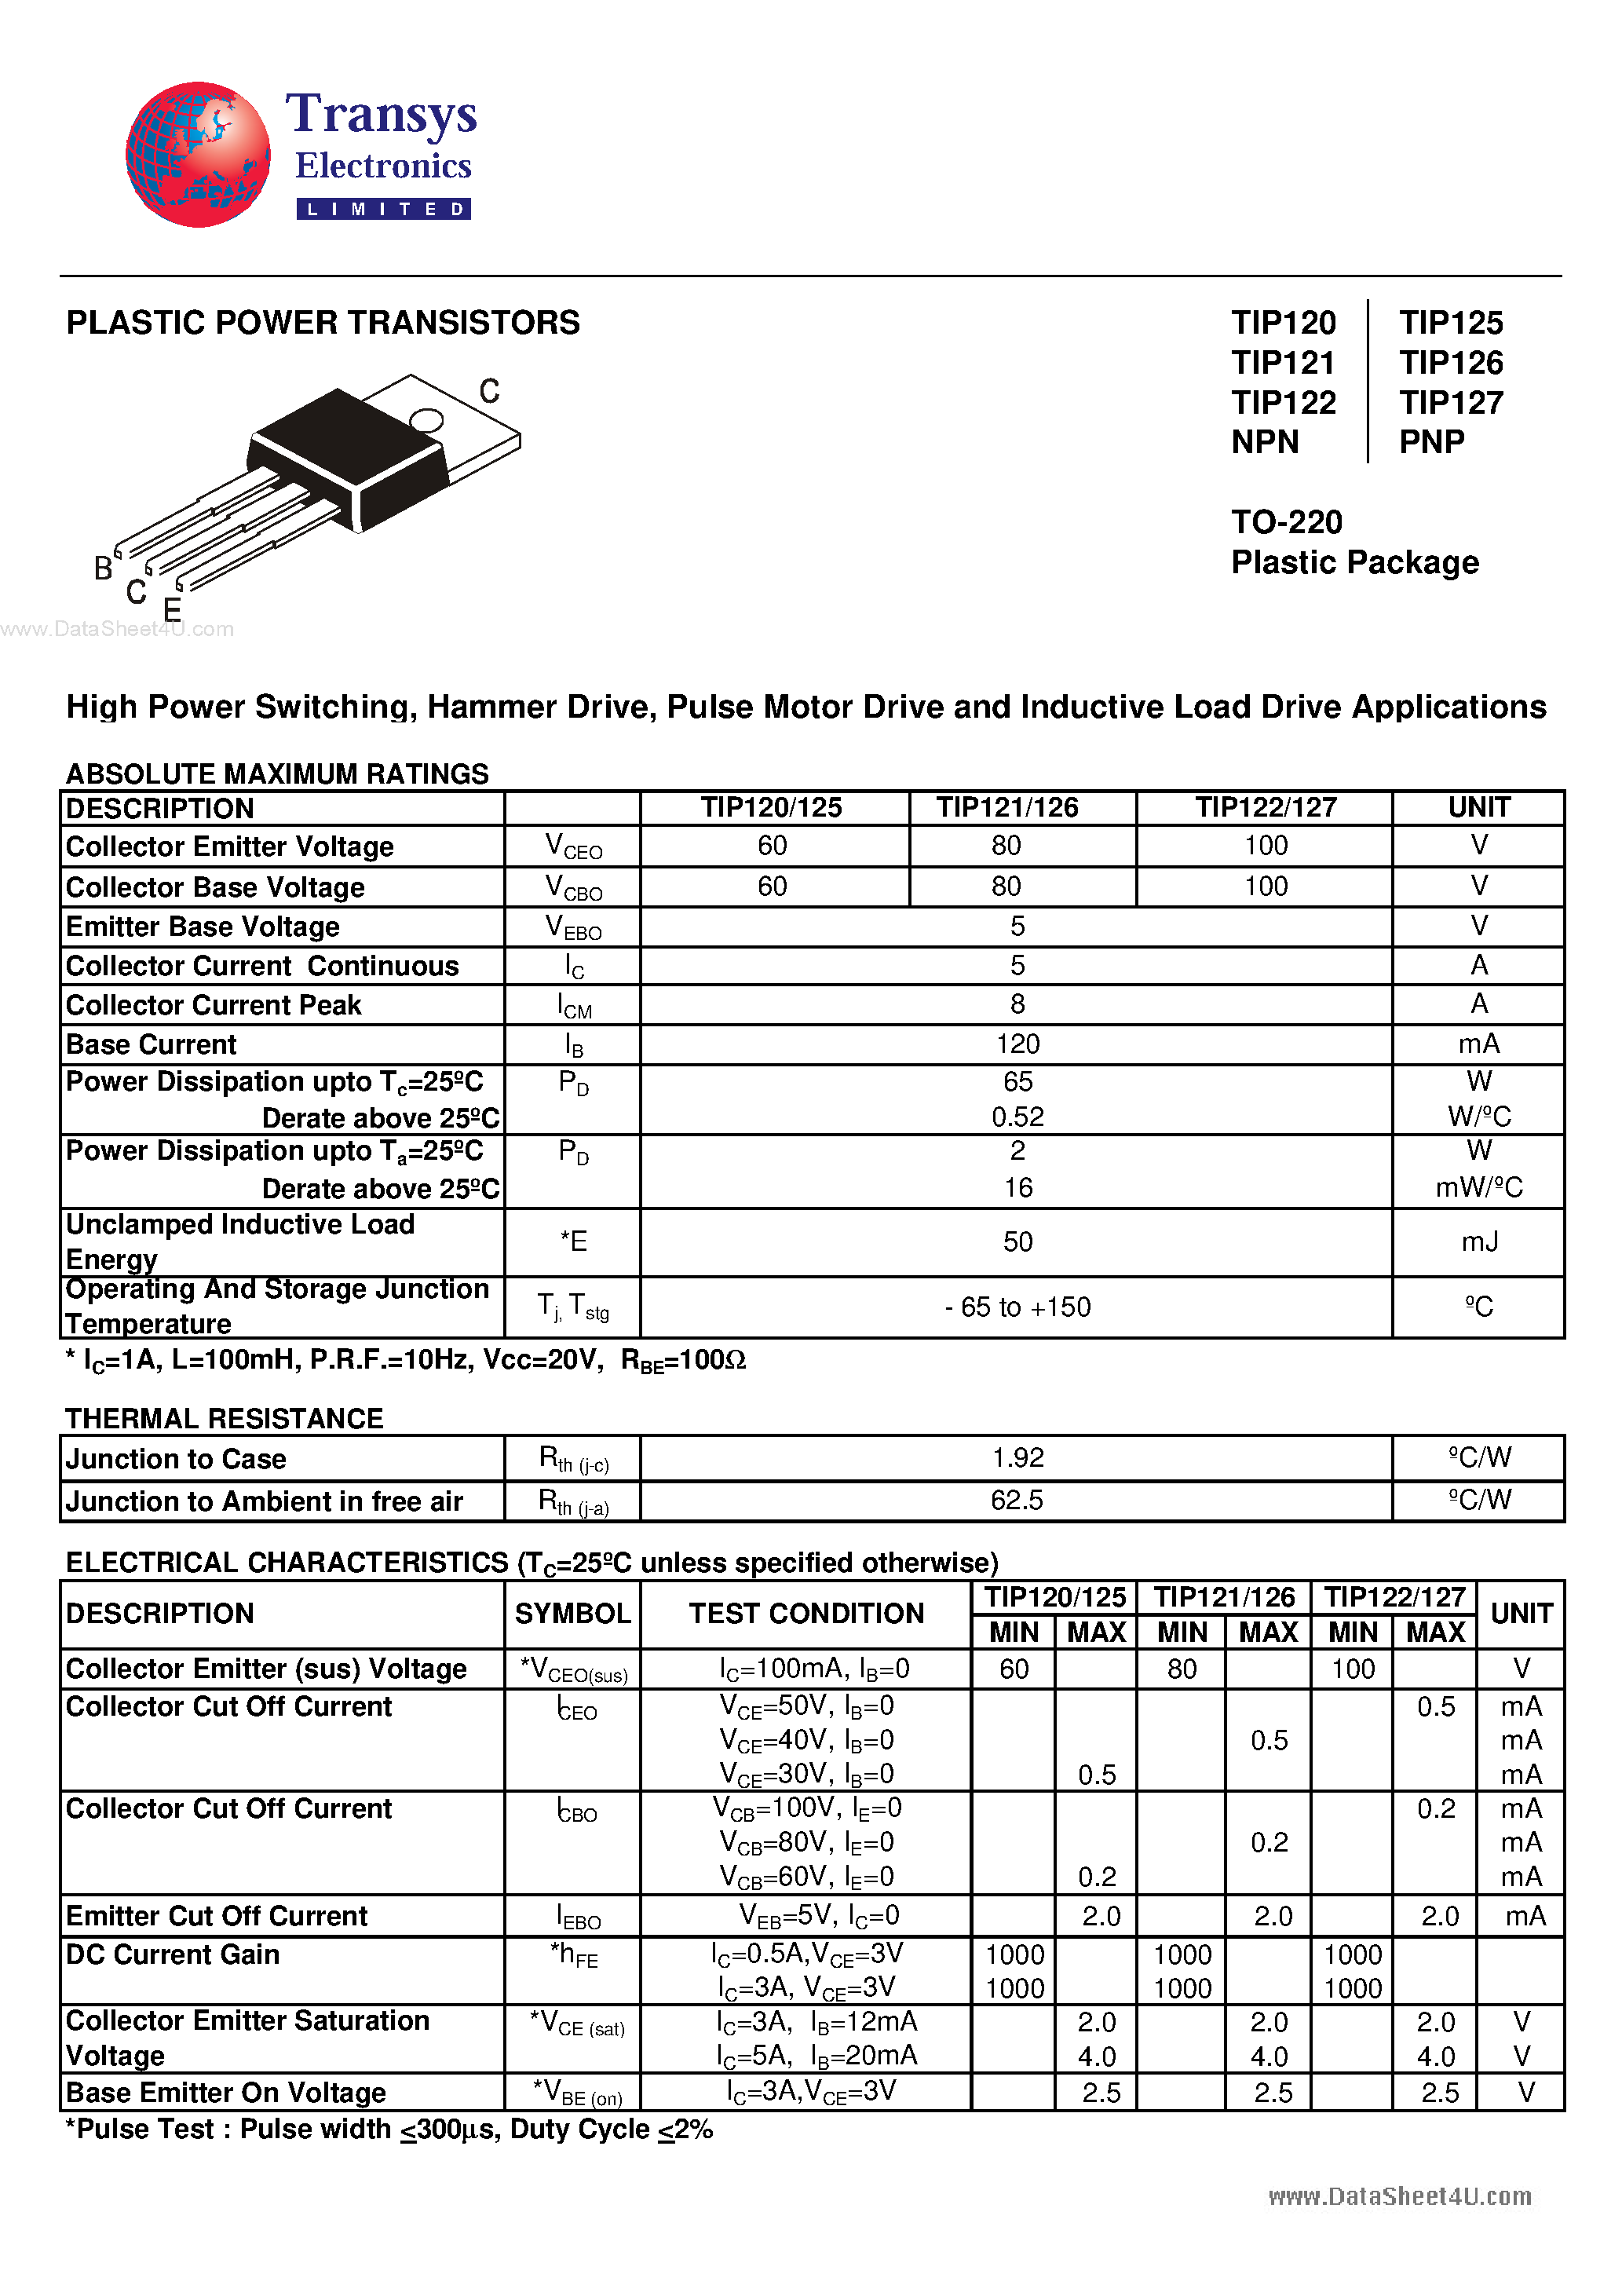 Datasheet TIP120 - (TIP120 - TIP127) PLASTIC POWER TRANSISTORS page 1